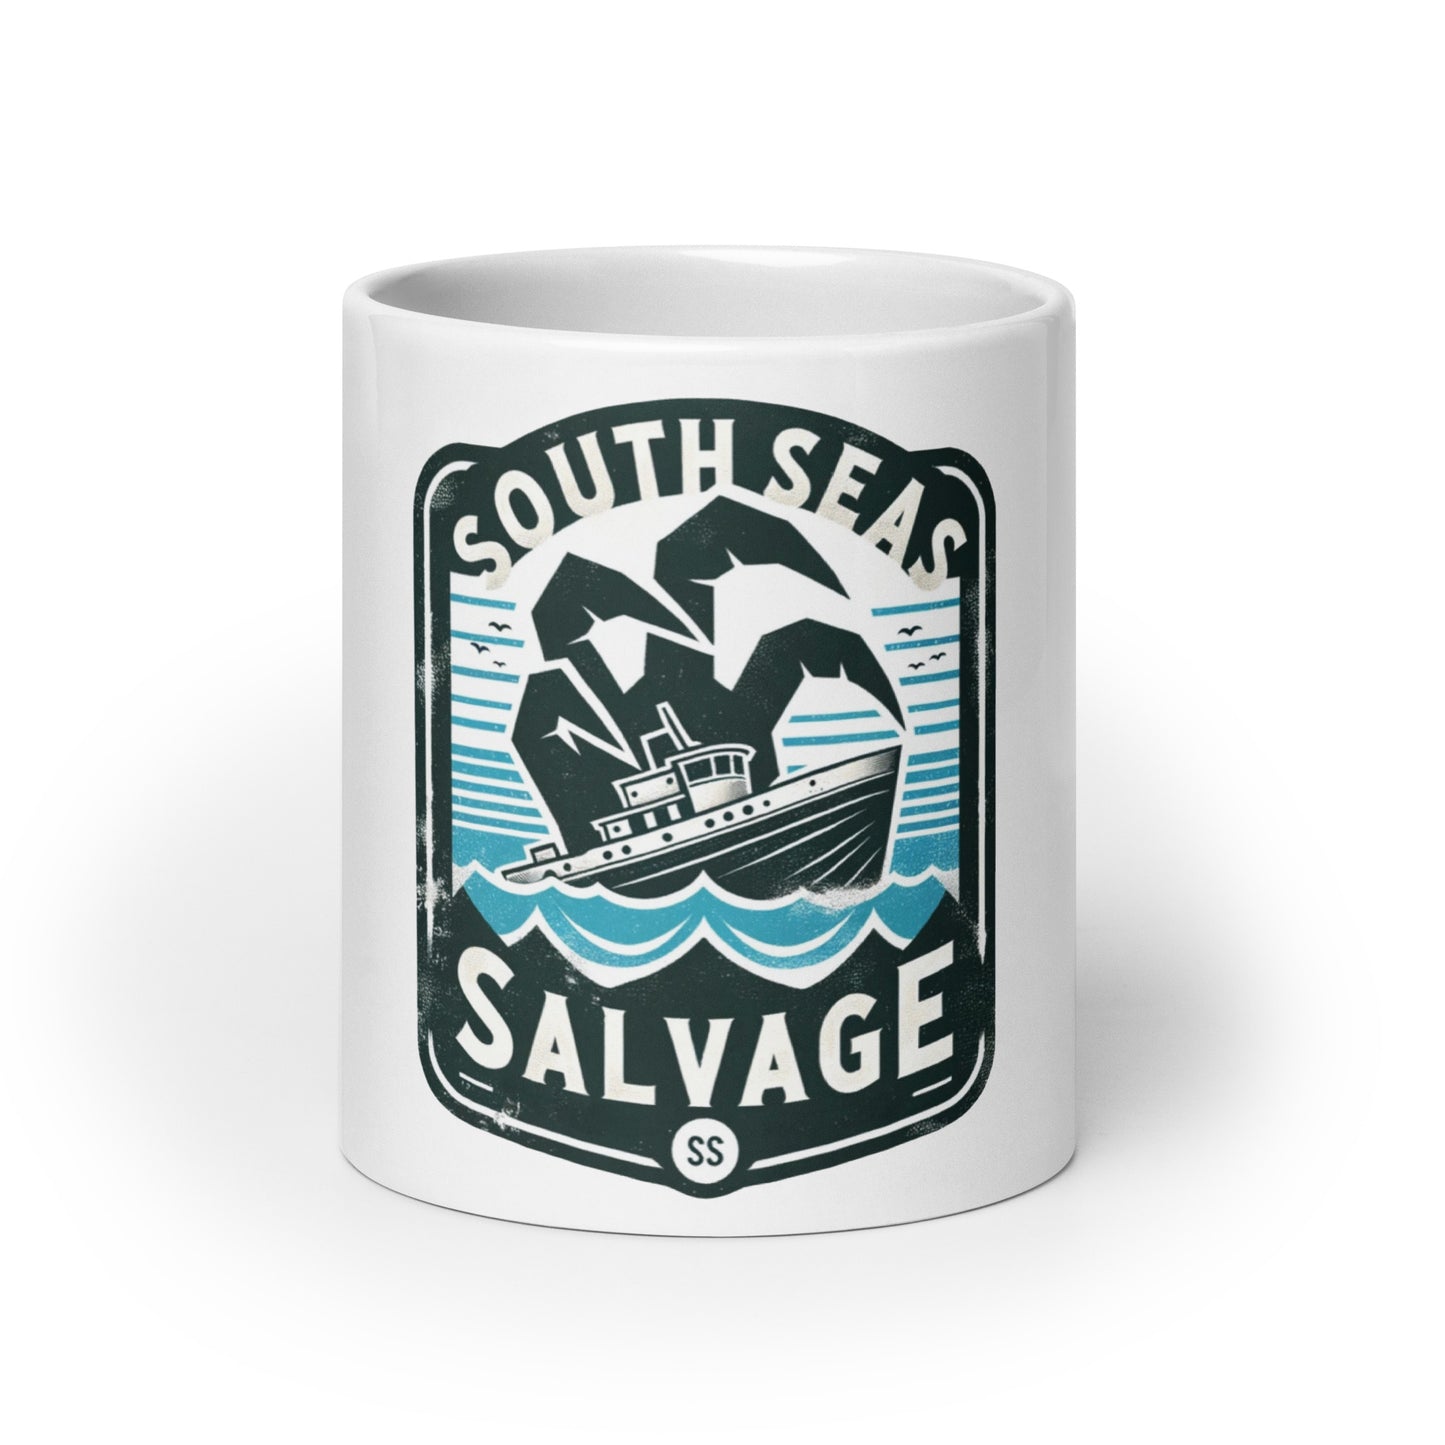 South Seas Salvage Company Surviving Monster Attacks Since 1954  White glossy mug